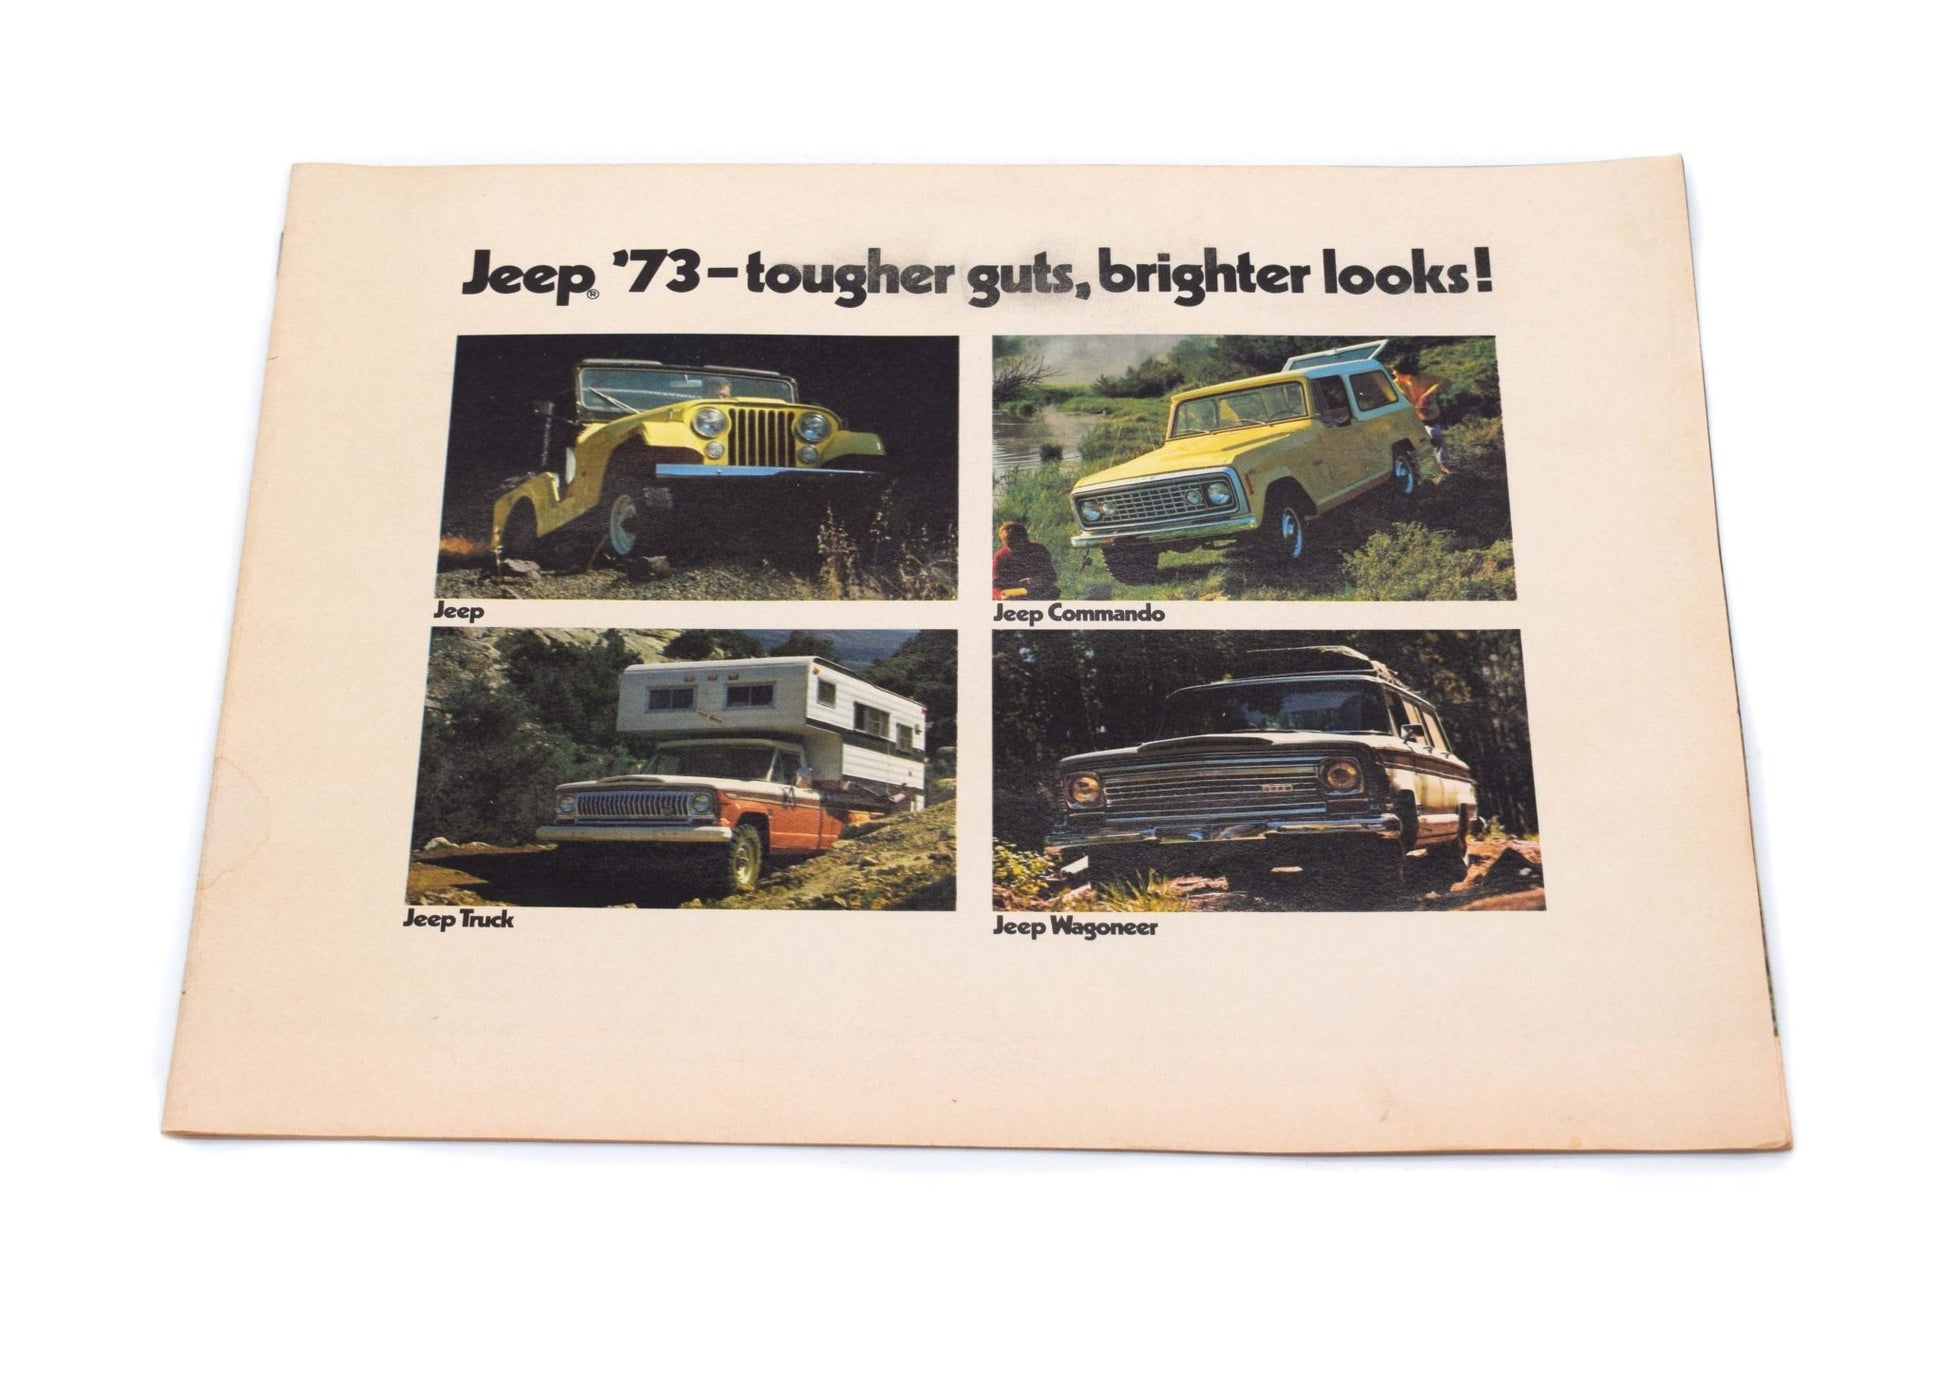 1973 Jeep Sales Catalog - The JeepsterMan